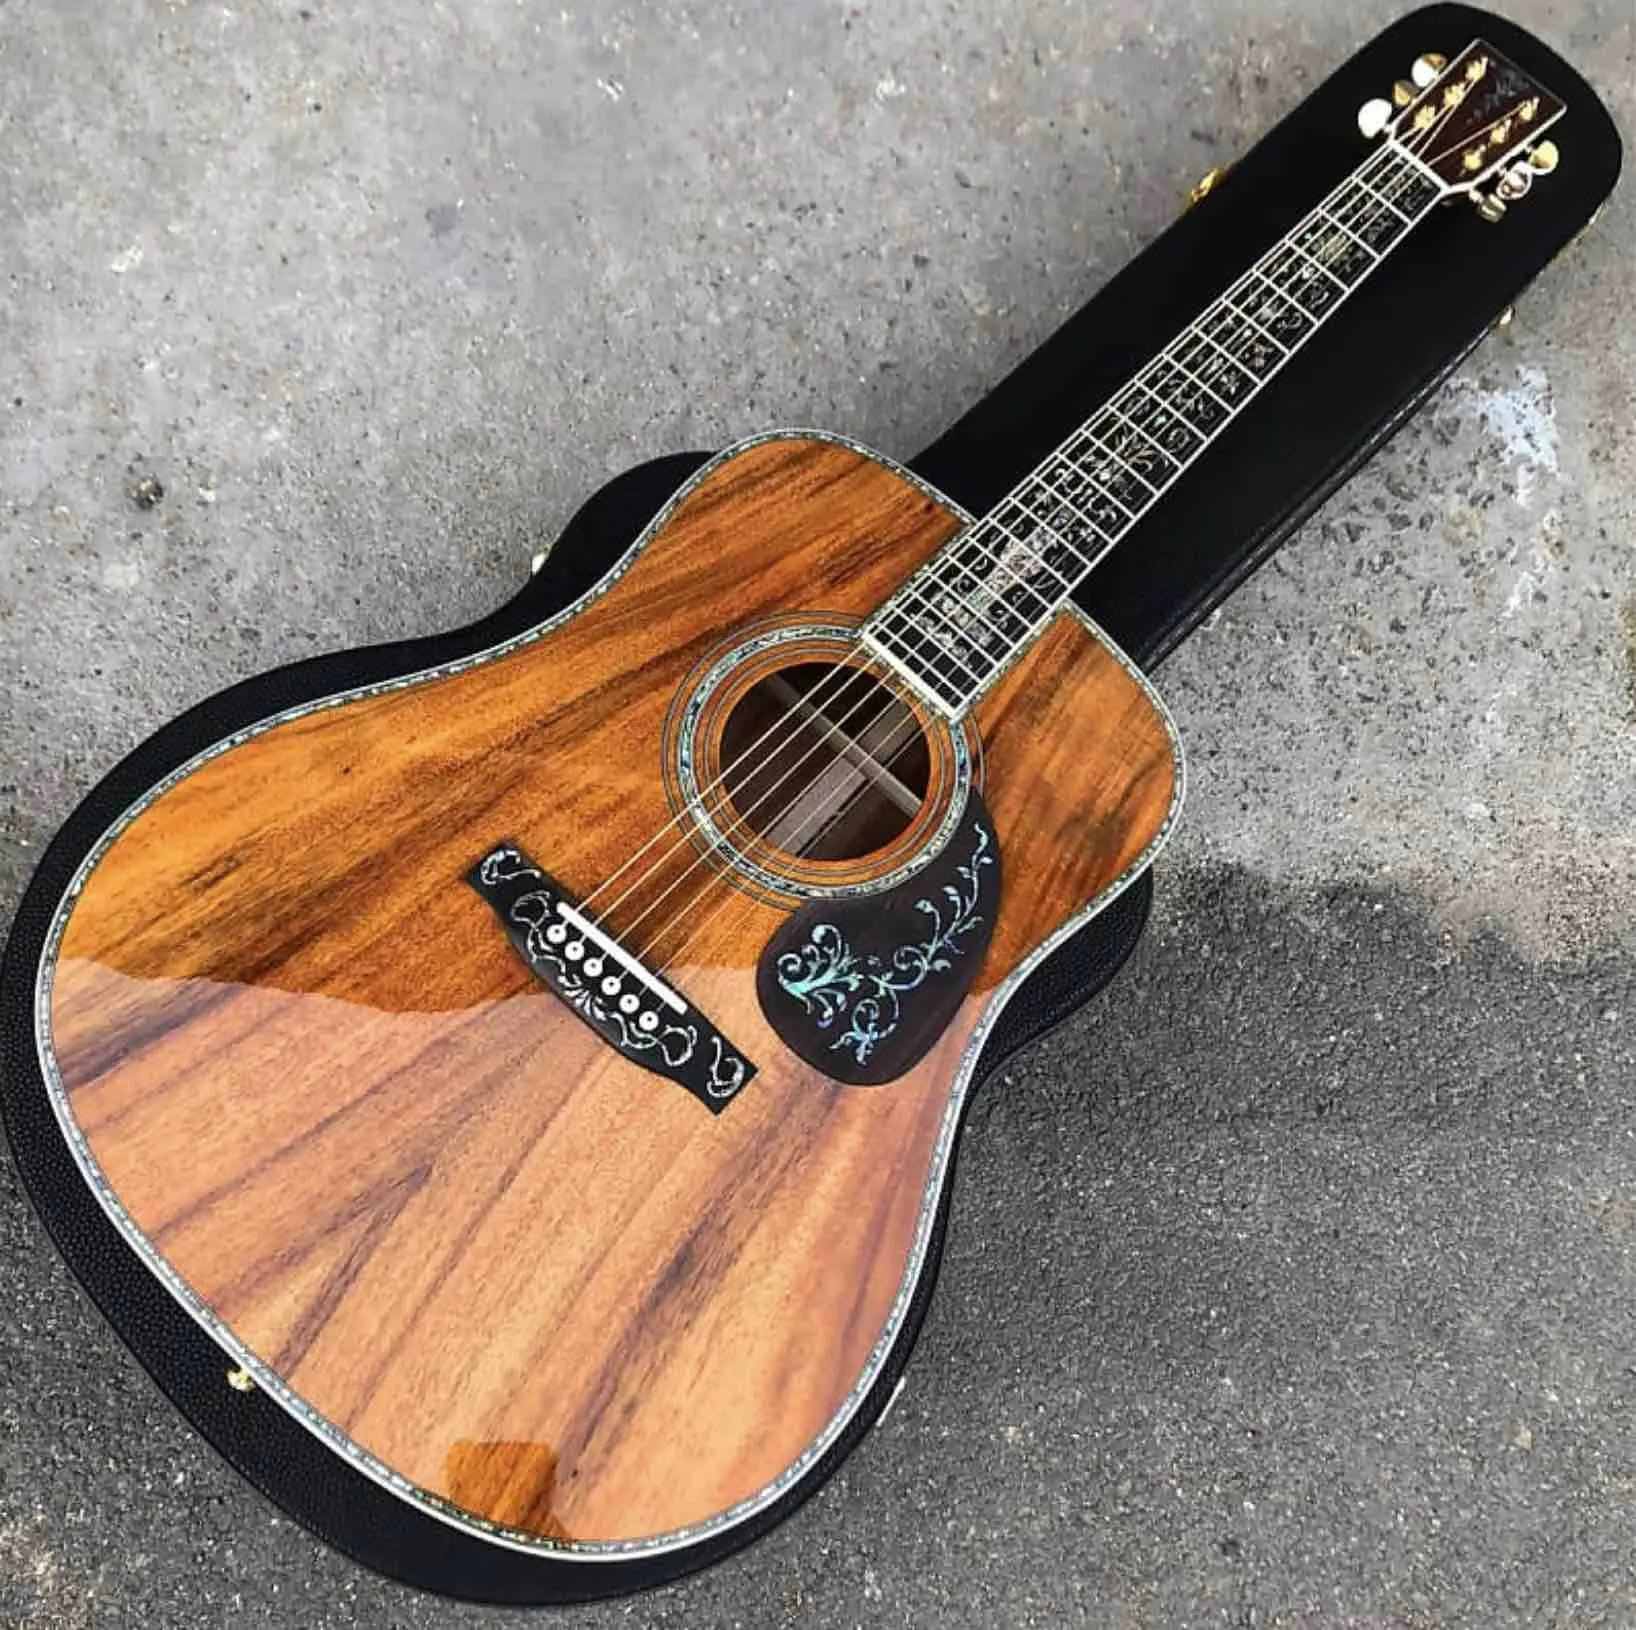 Ebony Fingerboard ALL Solid KOA Wood Acoustic Guitar Top Quality 41 Inches KOA Acoustic Electric Guitar